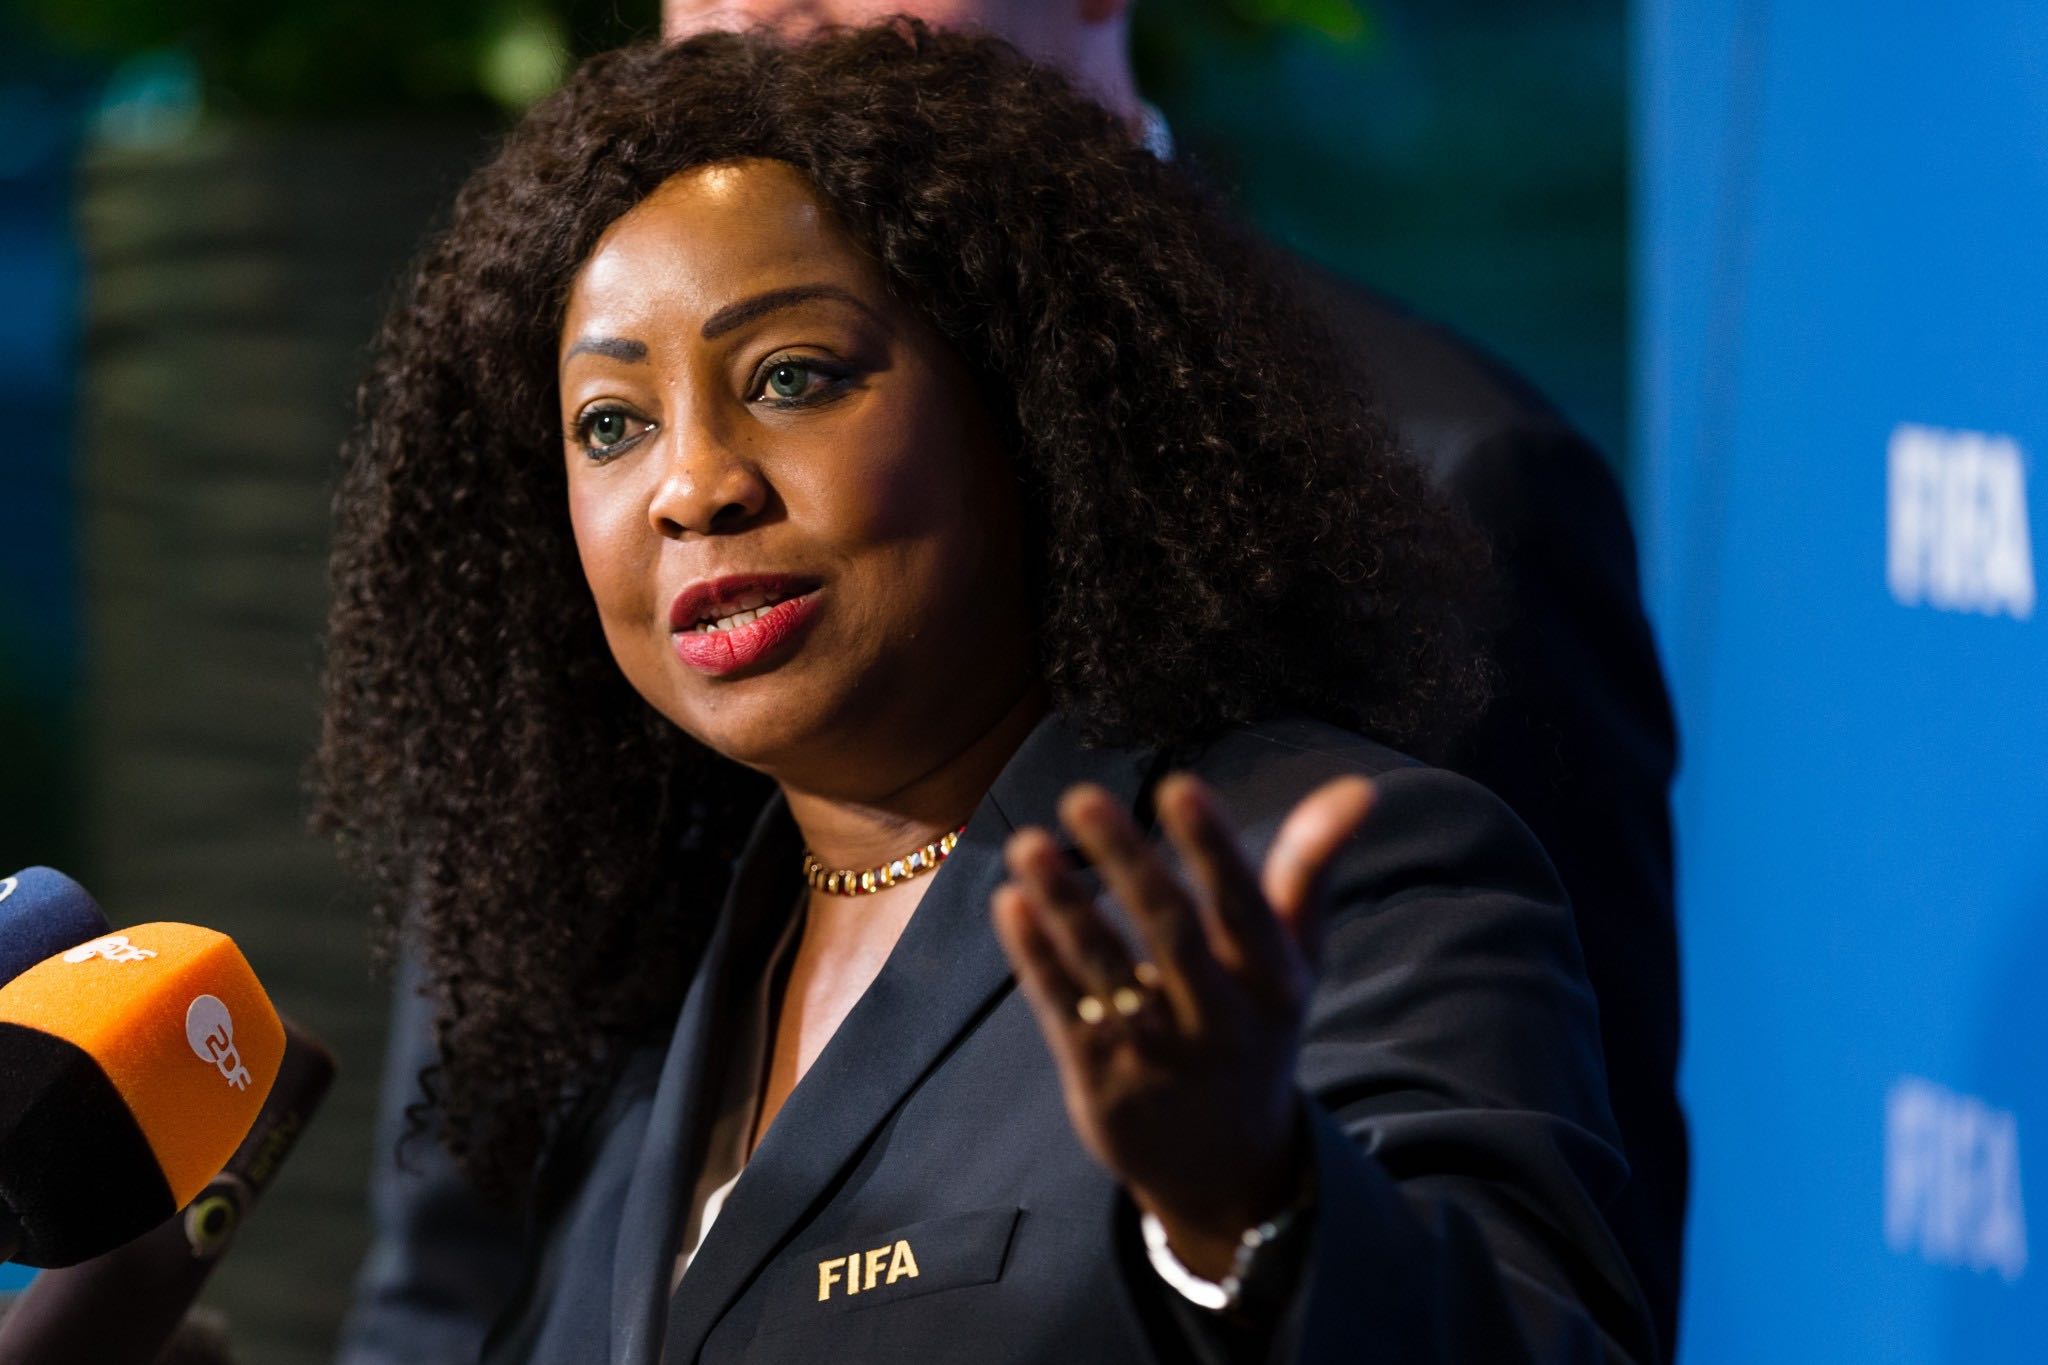 Fifa GS (Fatma Samoura pictured) tells ‘new’ TTFA to inform ‘former’ TTFA of deadline to drop court case, in bizarre letter.